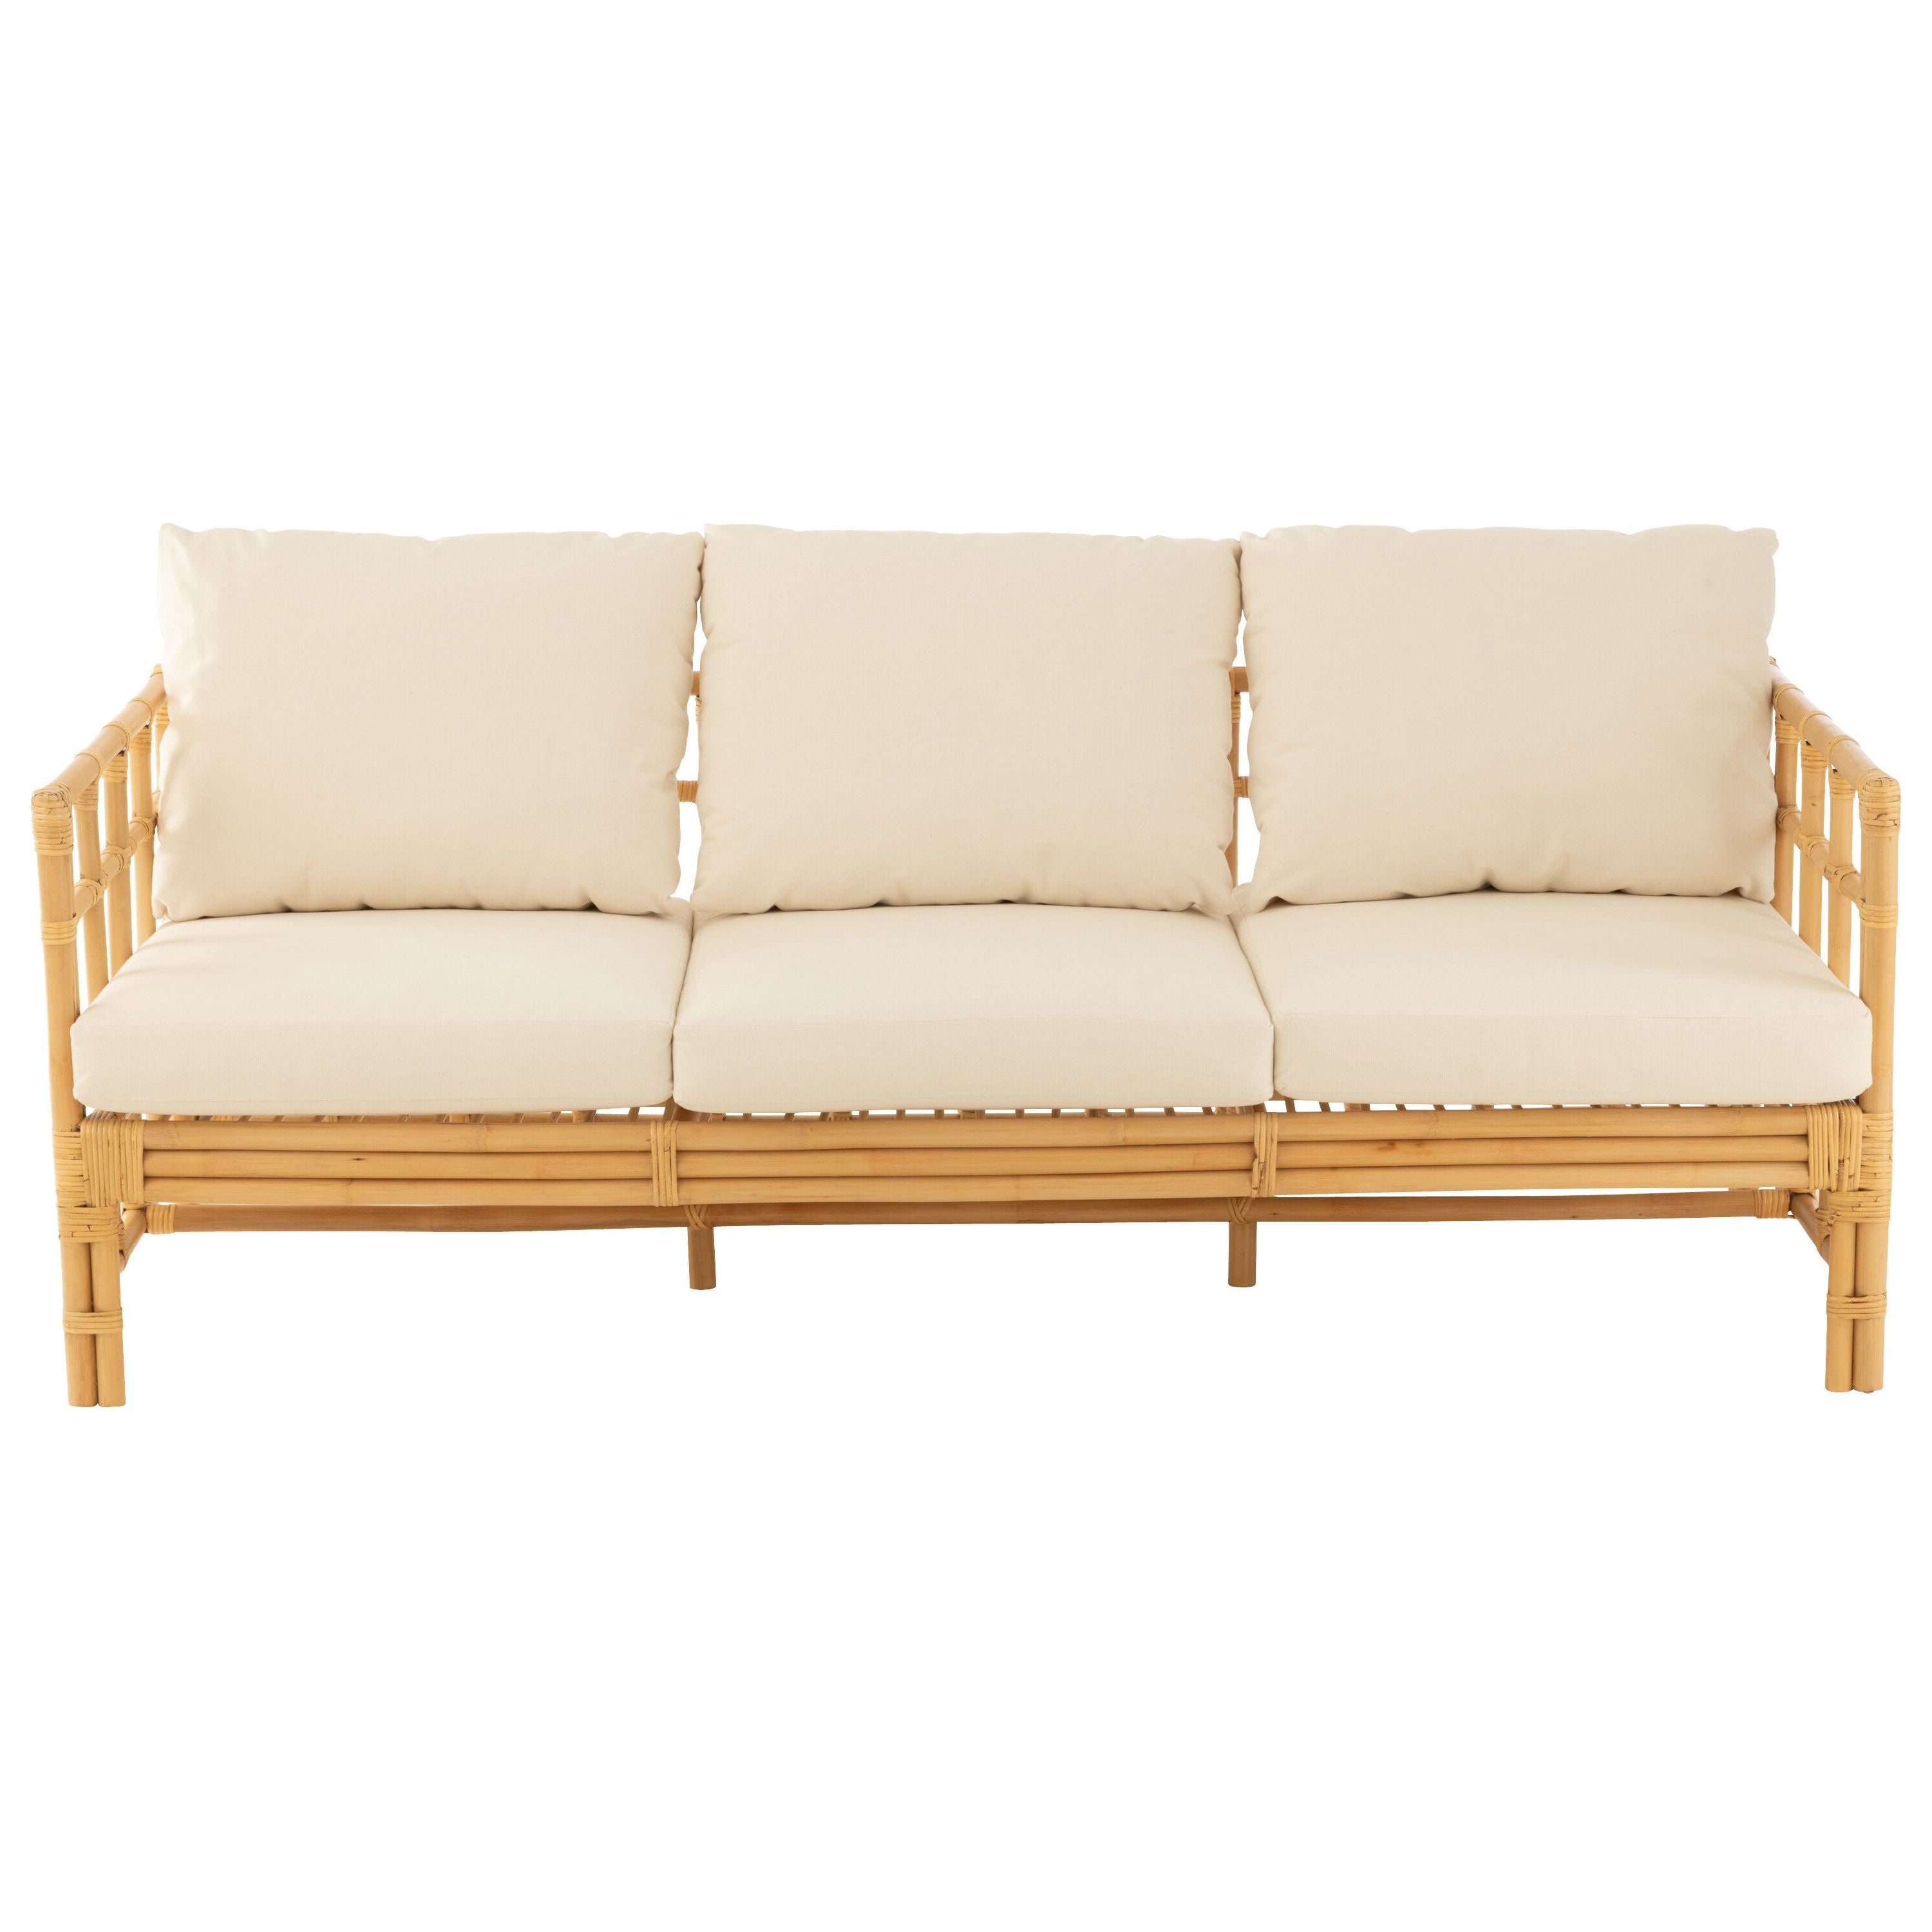 Sofa Elise+cushion 3 Persons Rattan/textile Natural/white